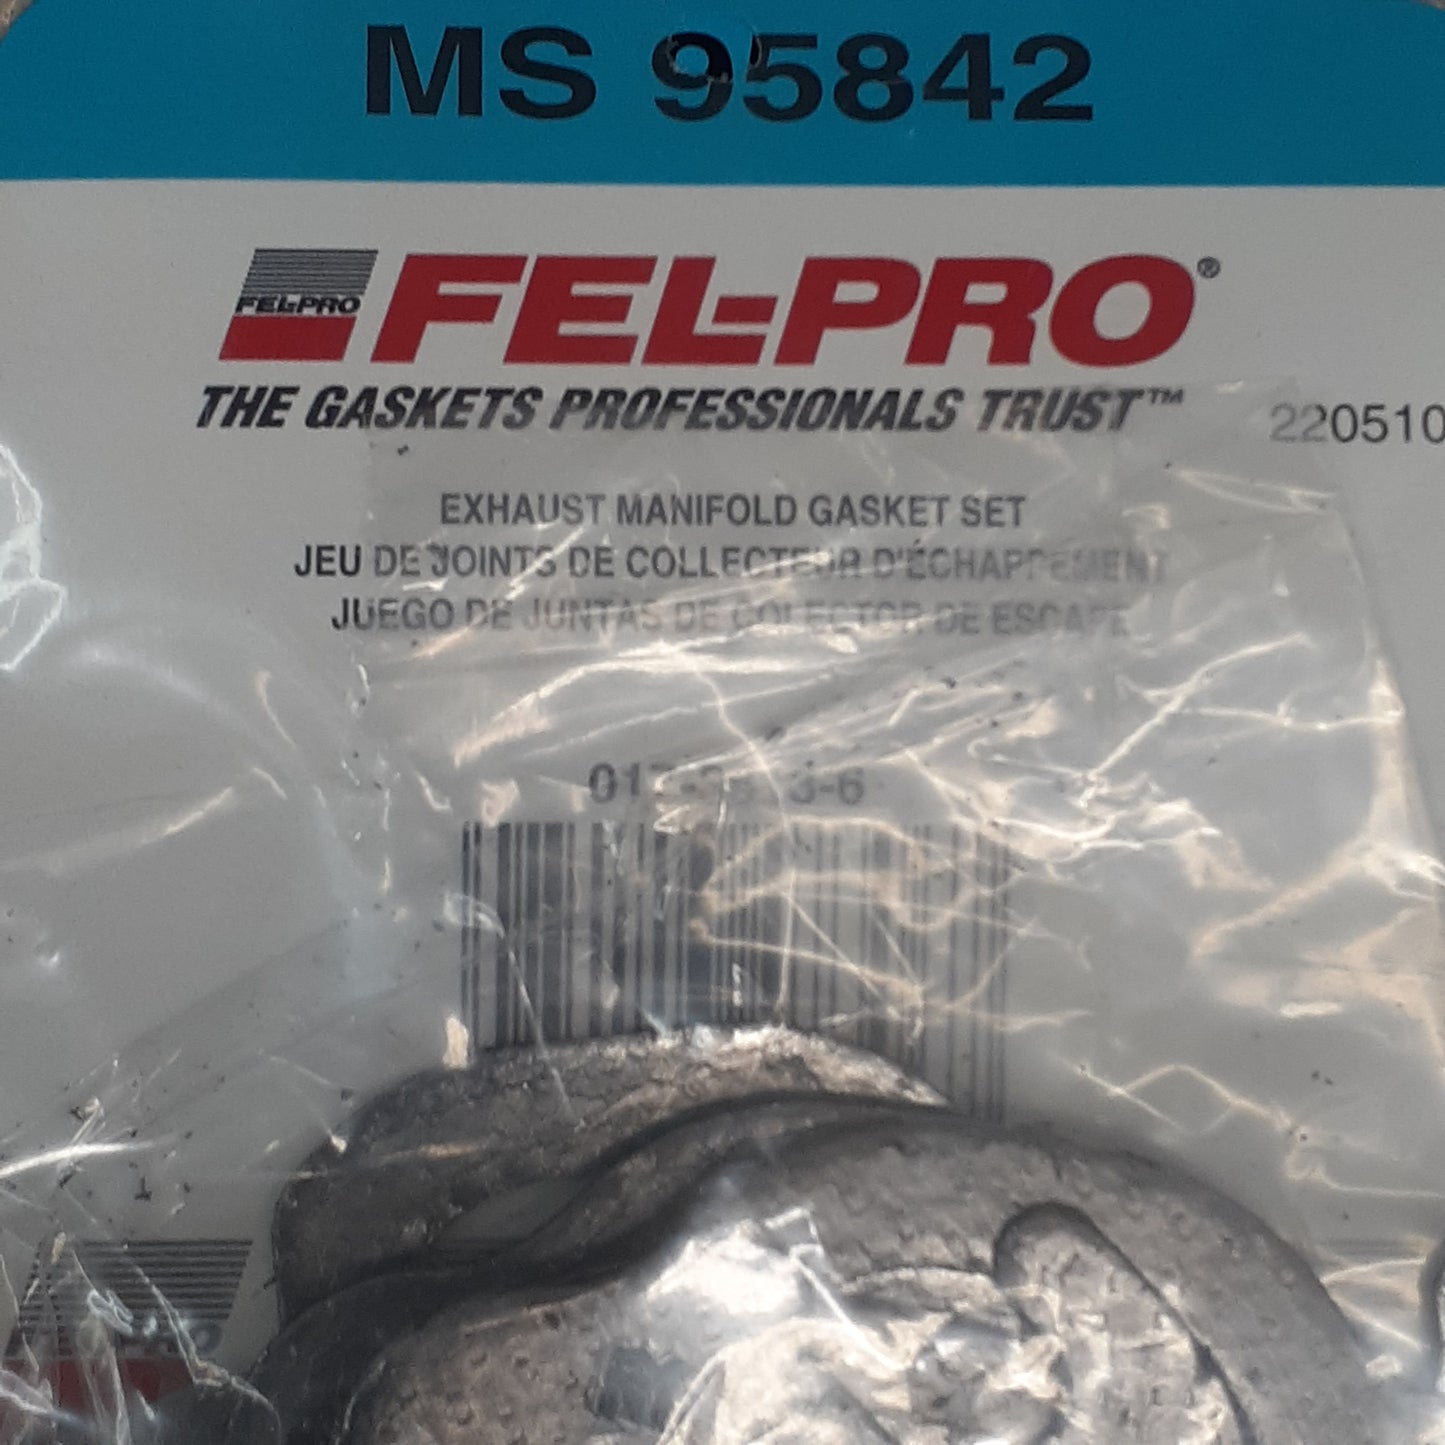 FEL-PRO Exhaust Manifold Gasket Set (New)